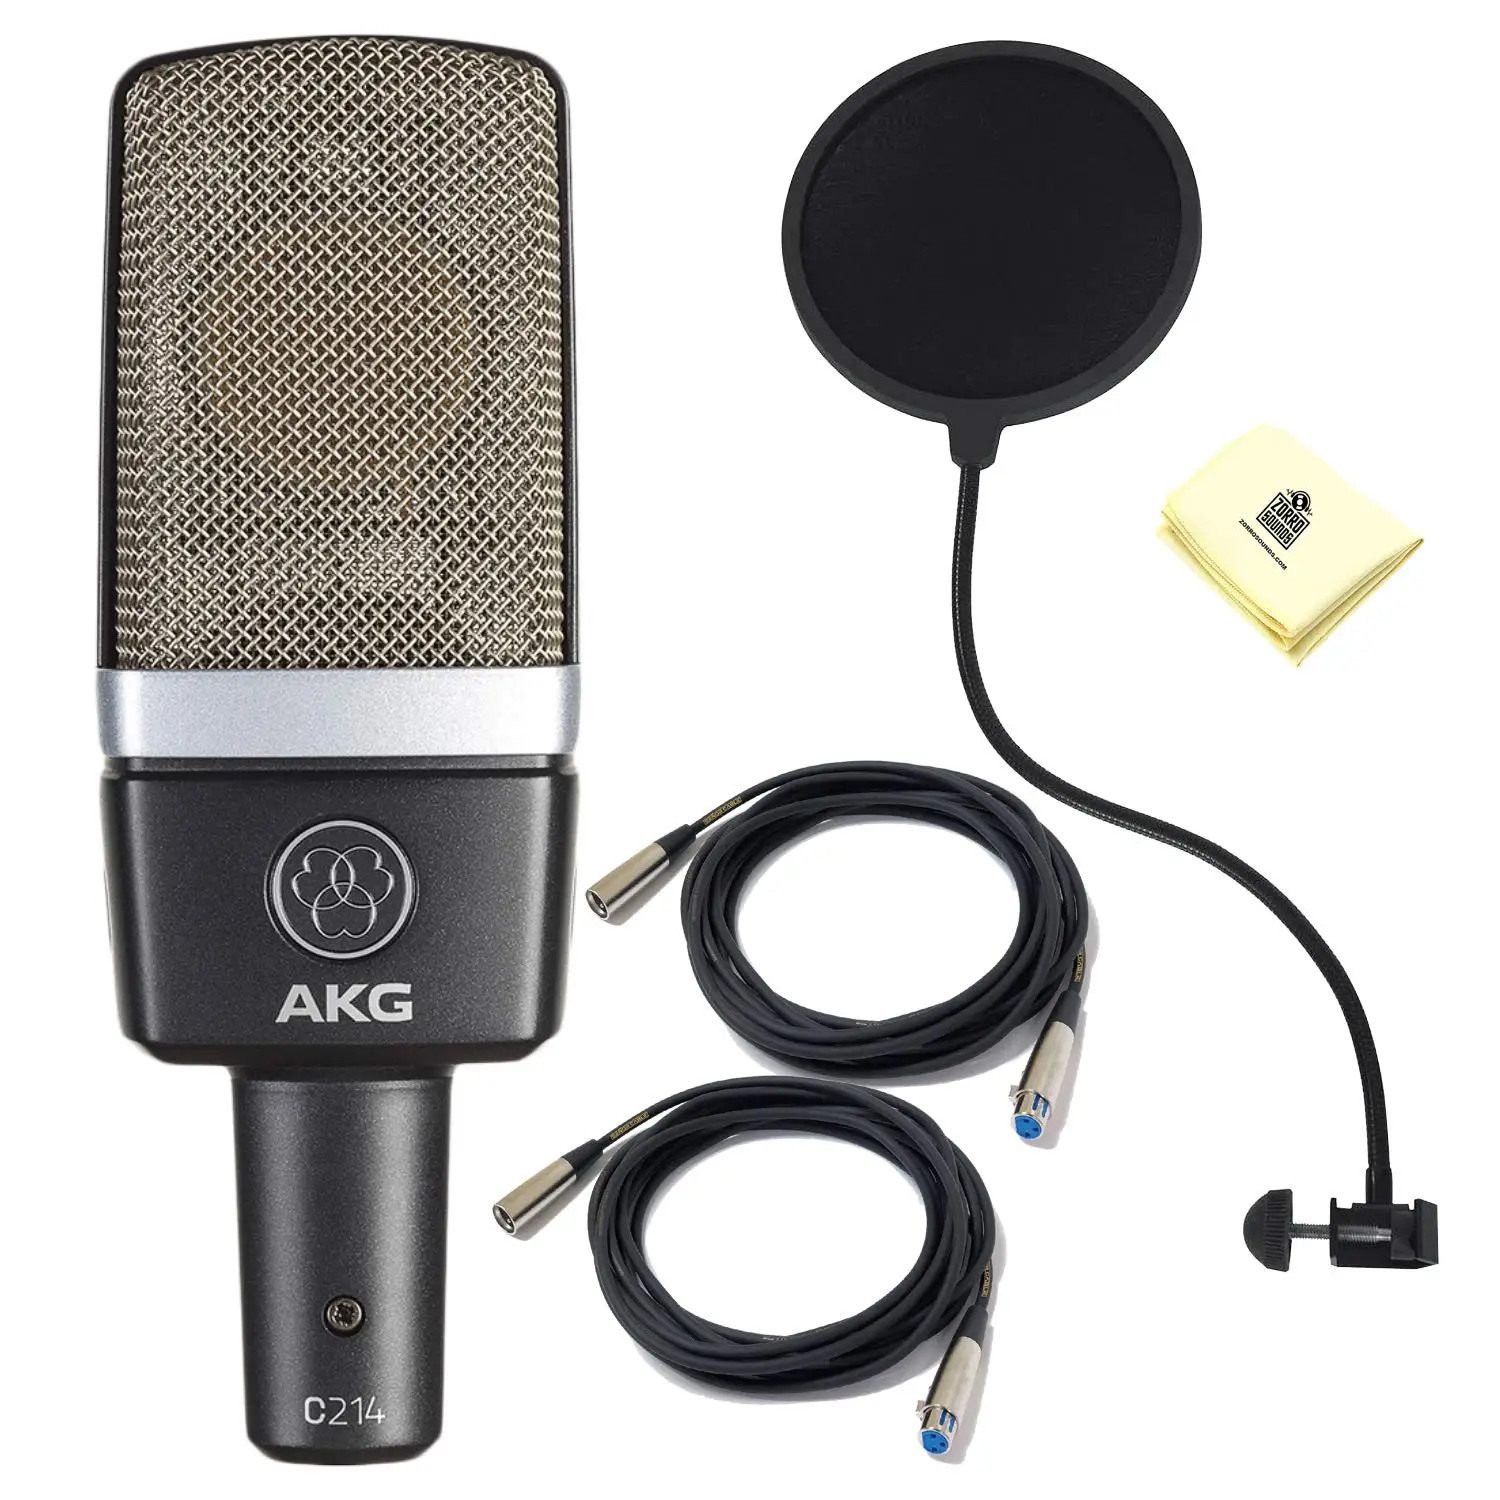 

NEW SALES AKG Pro Audio C414 XLII Stereoset Vocal Condenser Microphone Multipattern